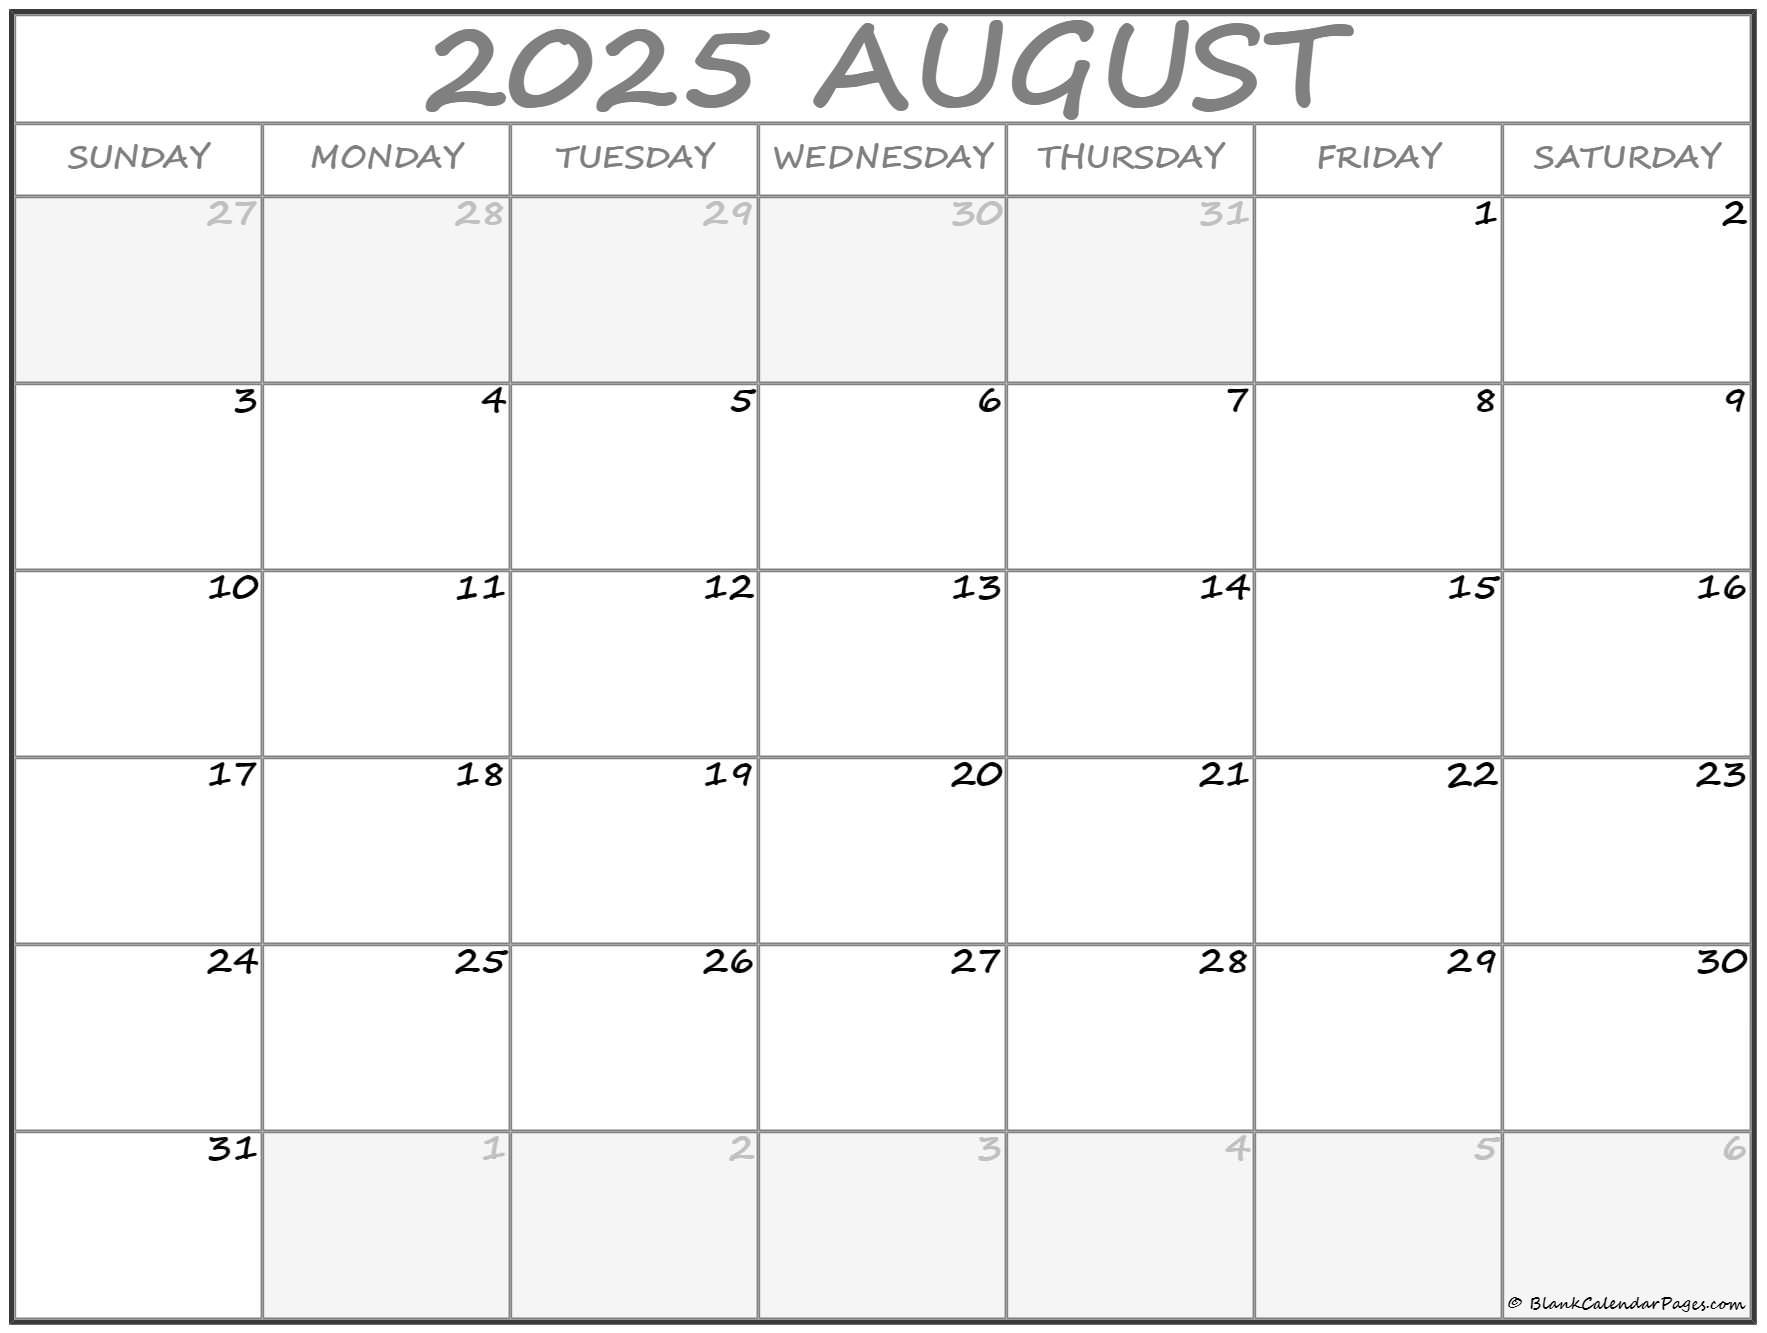 august-2025-calendar-free-printable-calendar